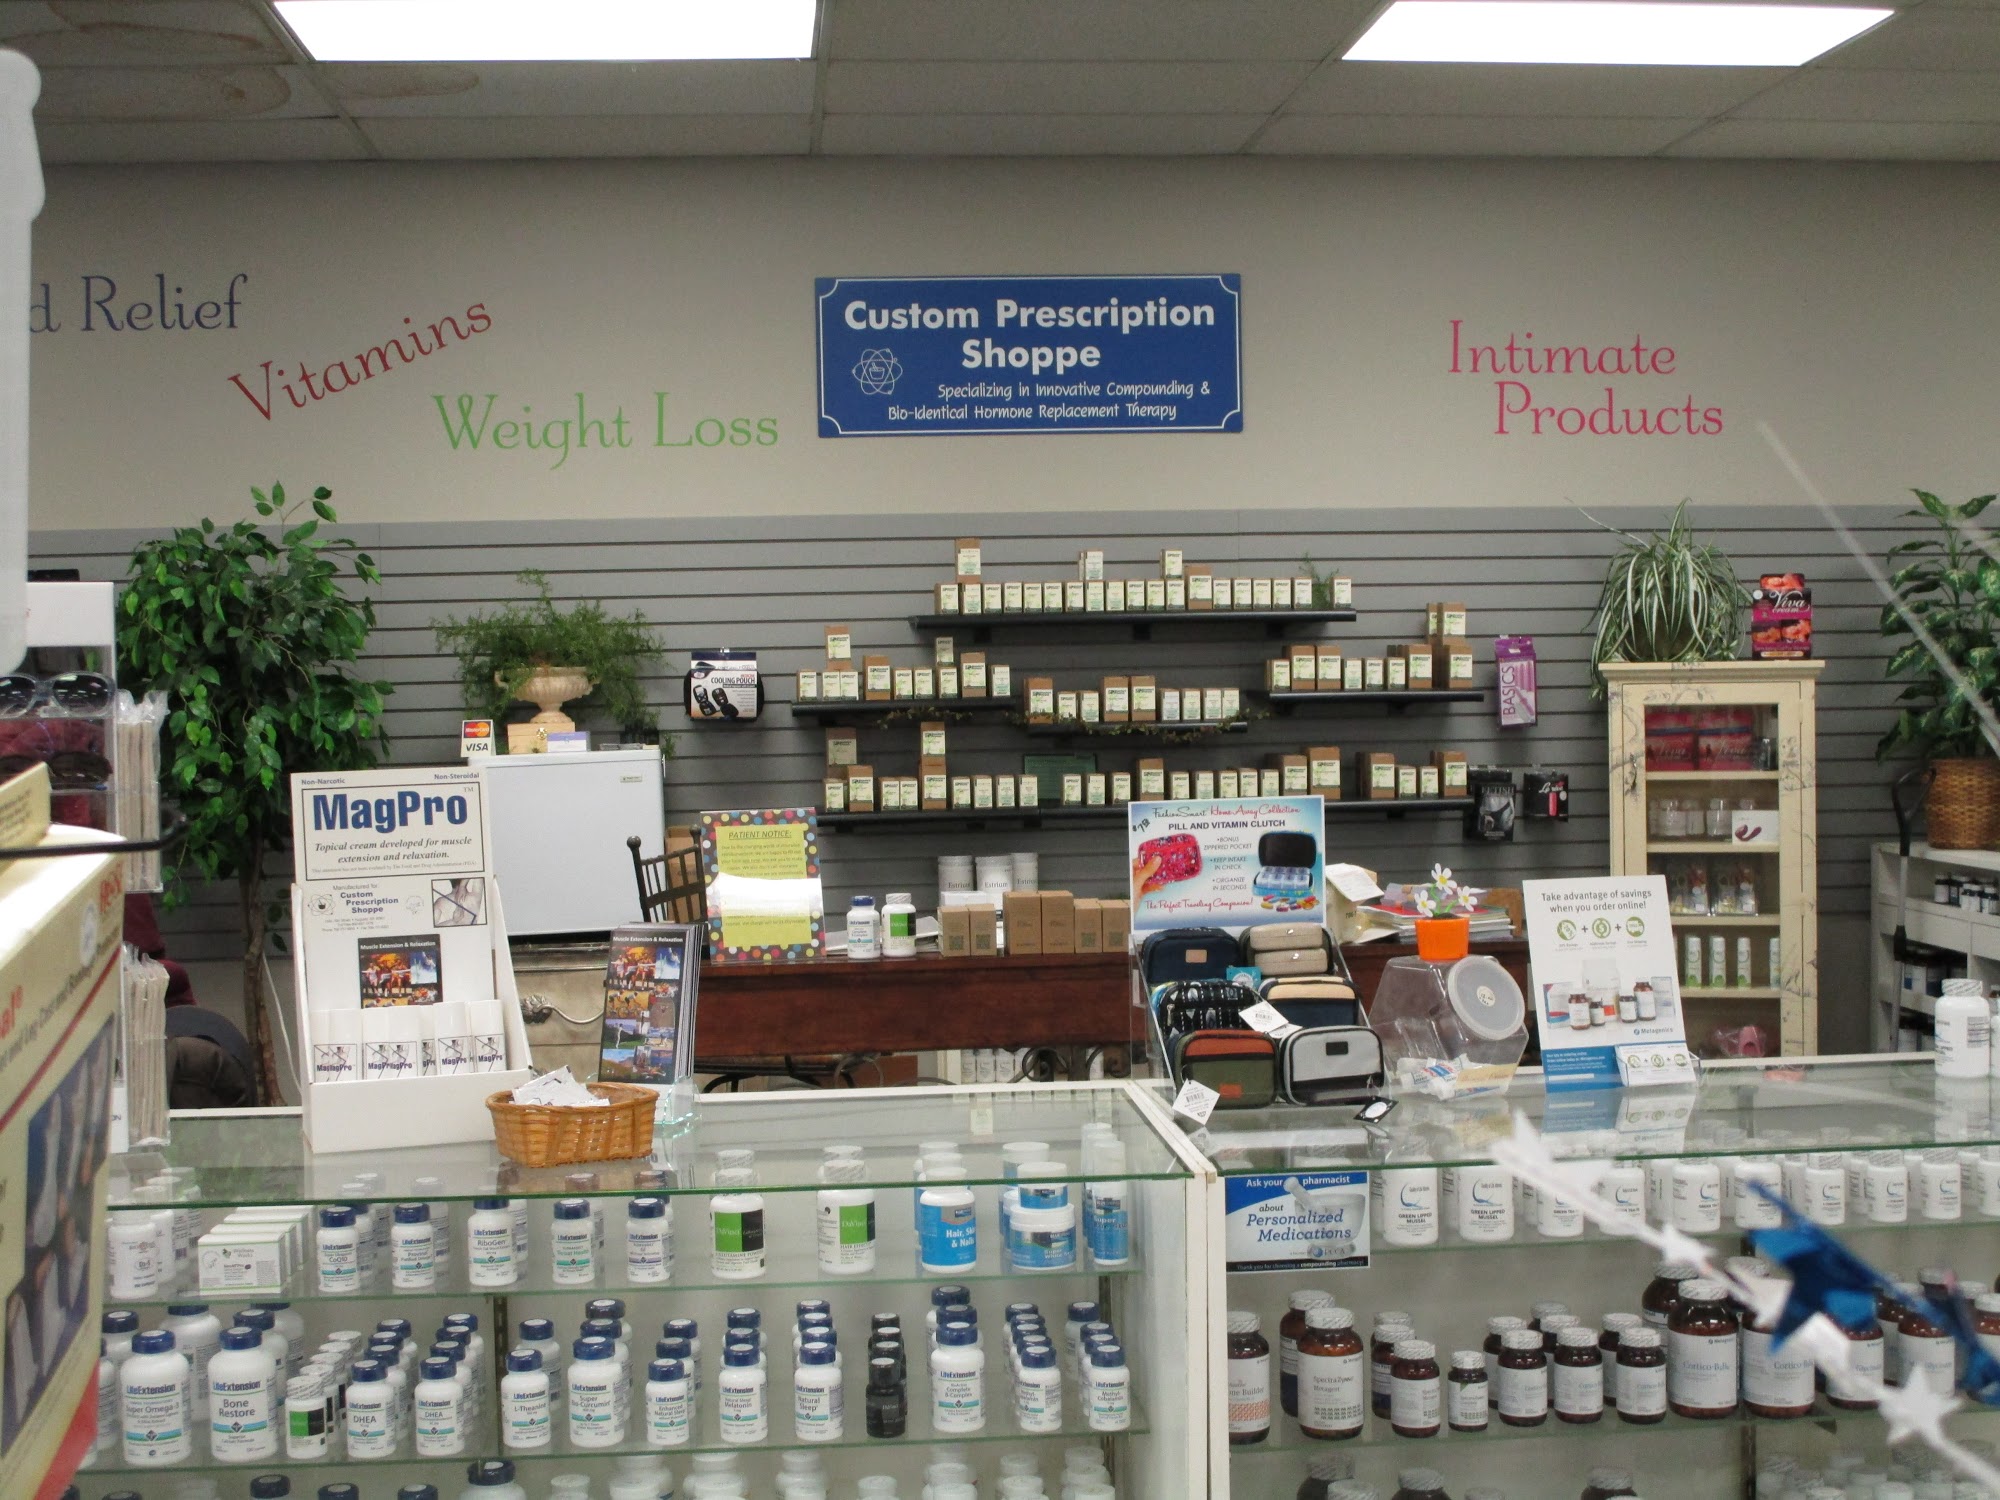 Custom Prescription Shoppe at DuraMed